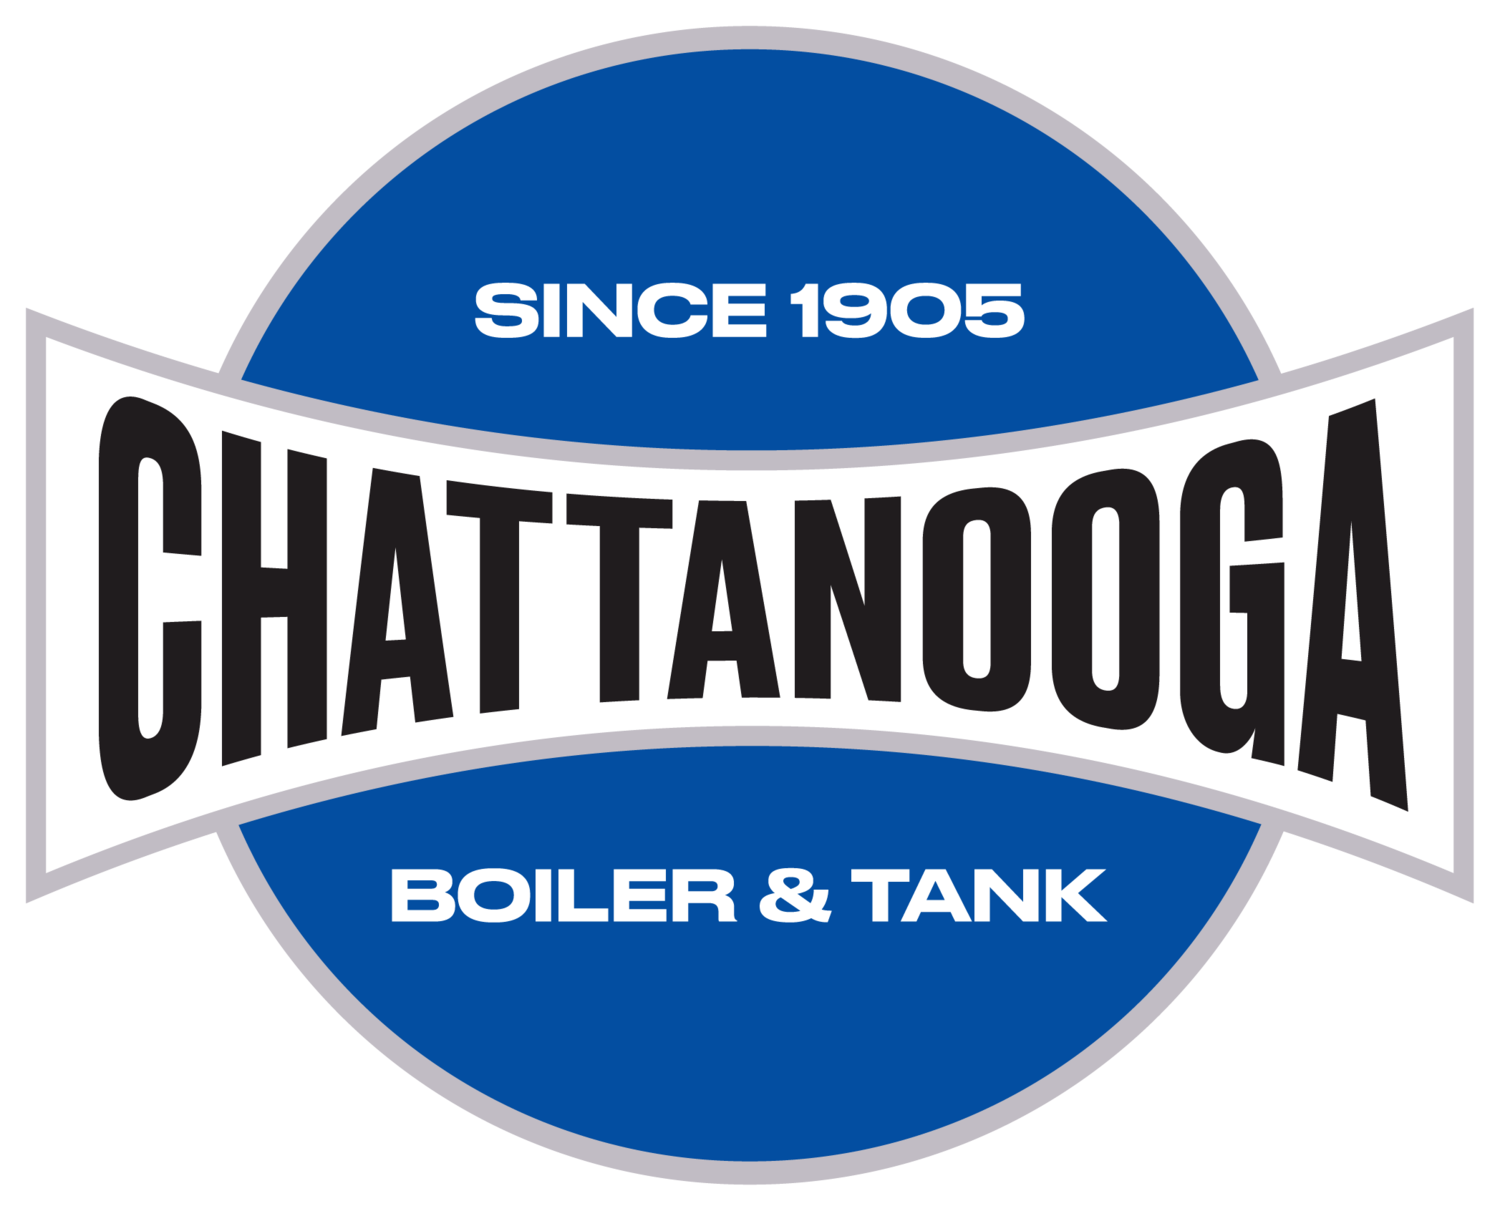 Chattanooga Boiler & Tank